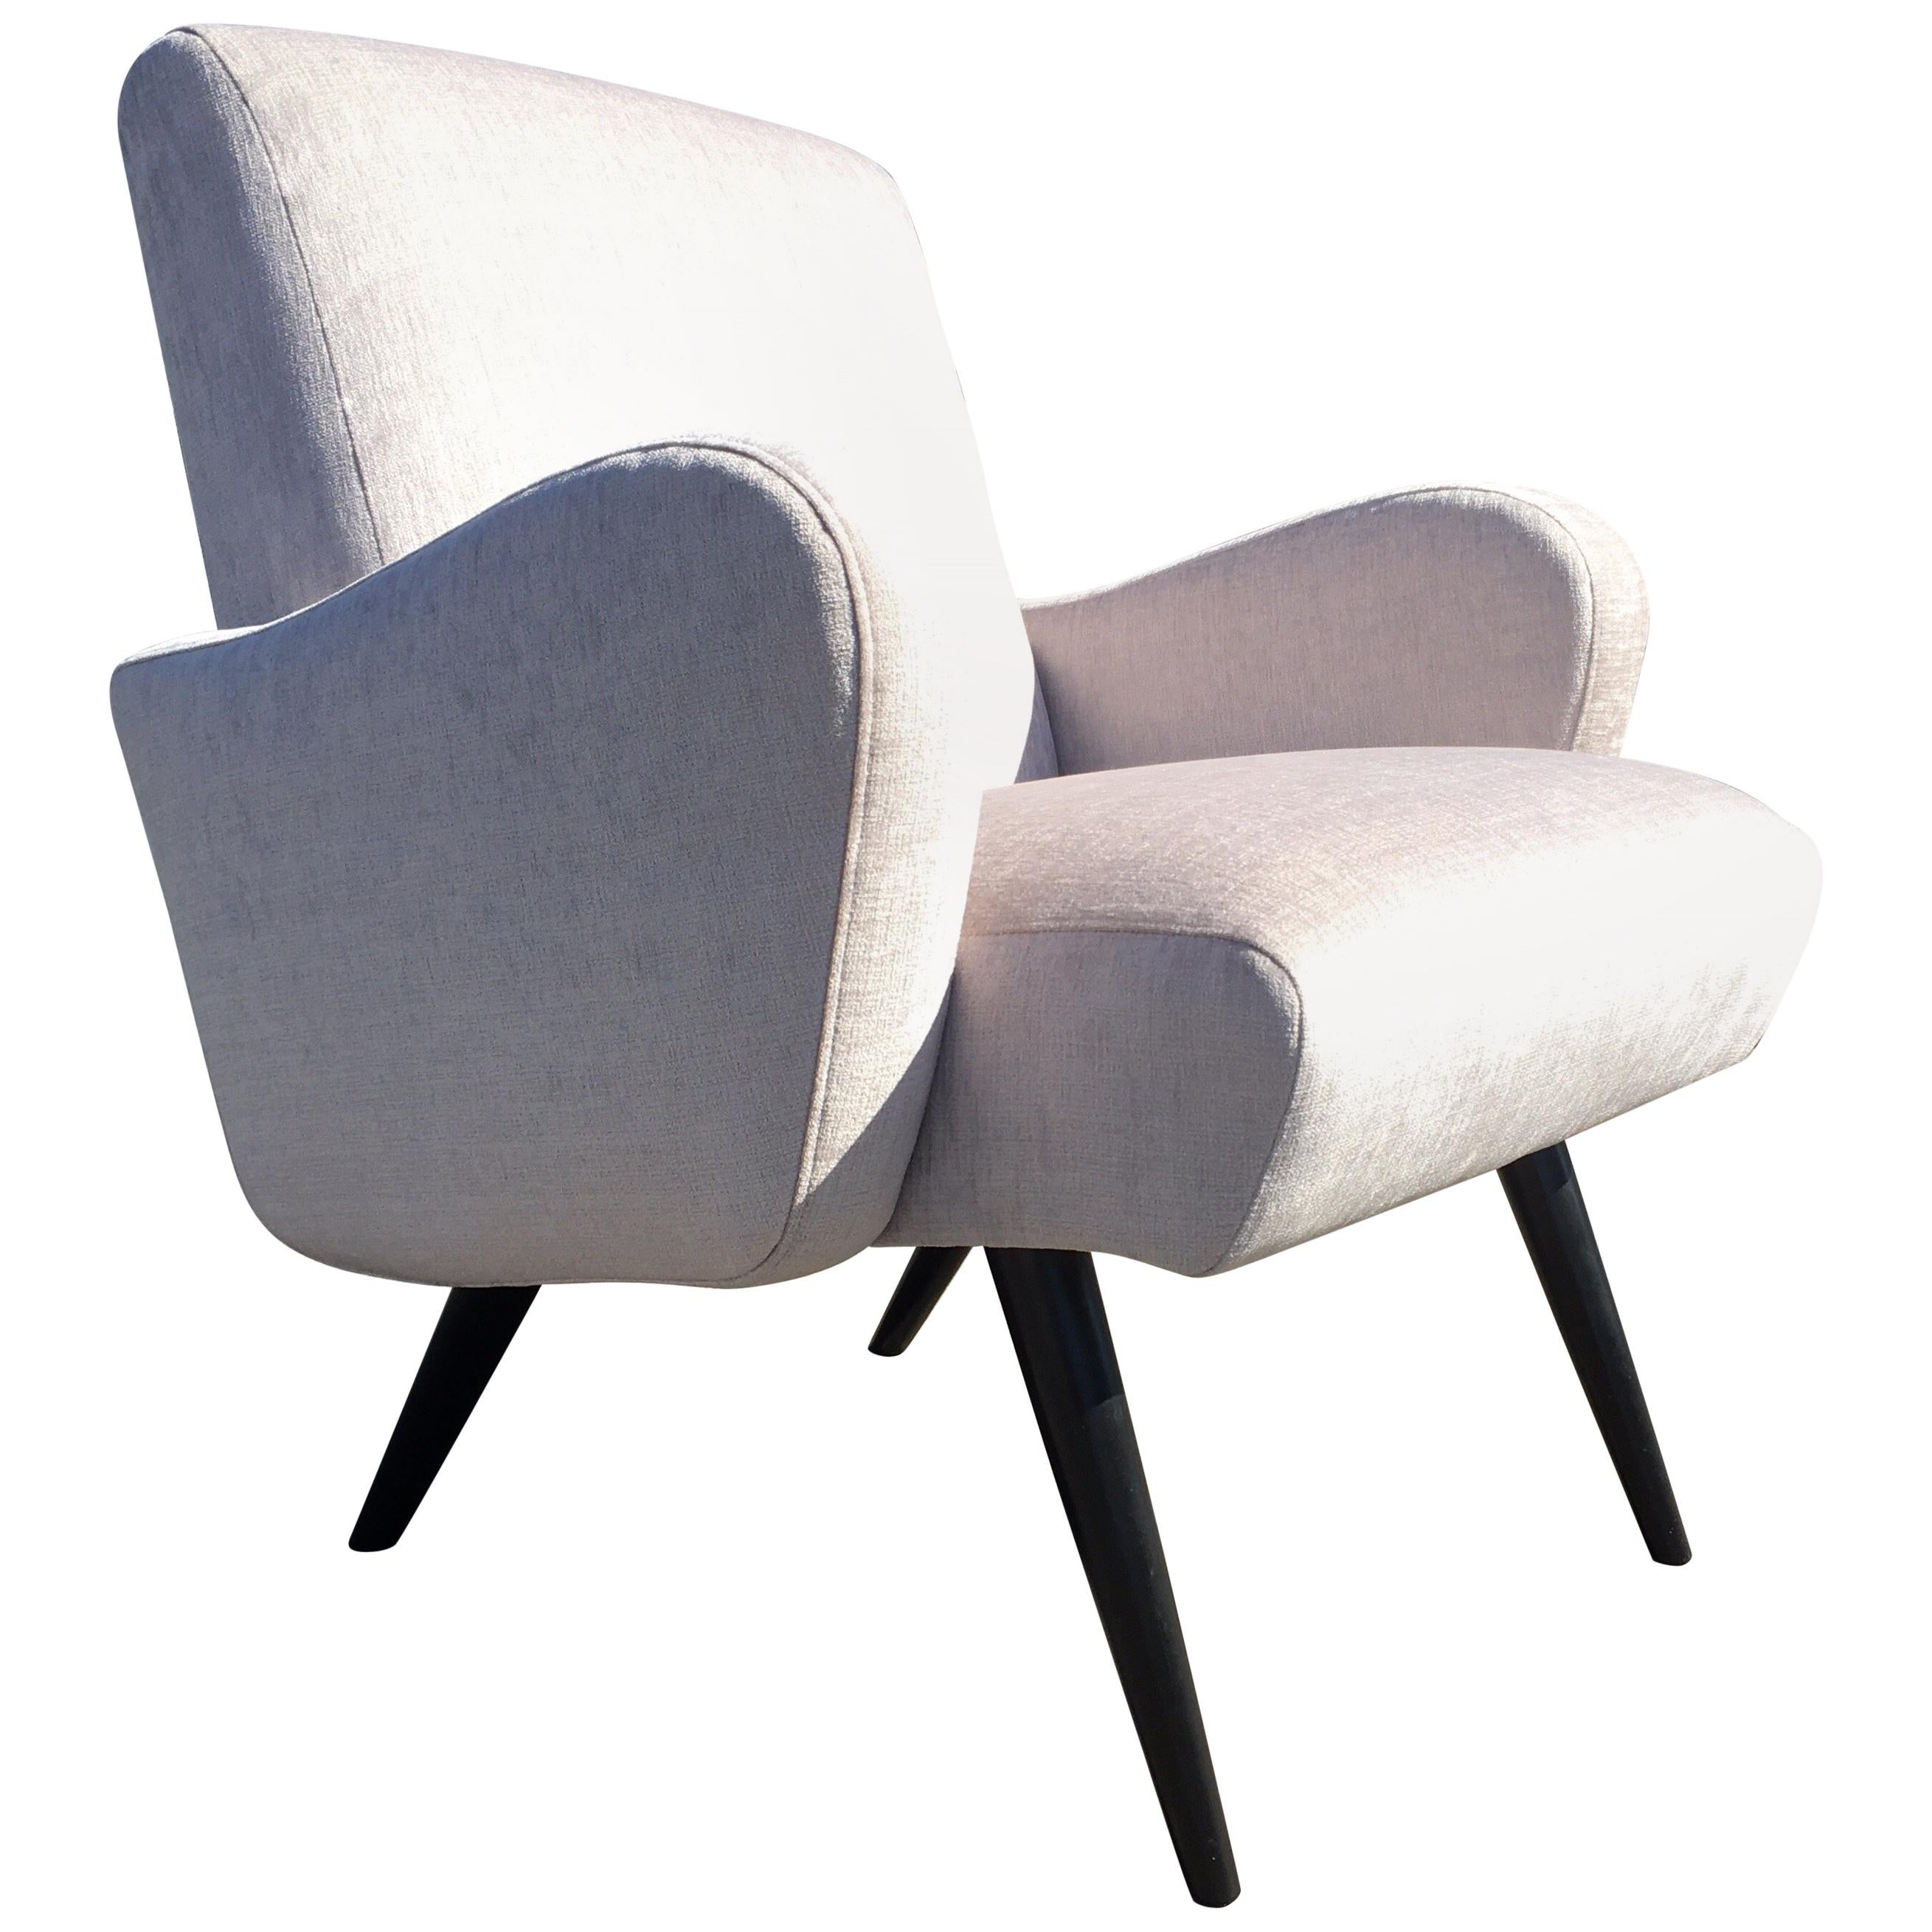 Beautiful Pair of Mid-Century Modern Lounge Chairs